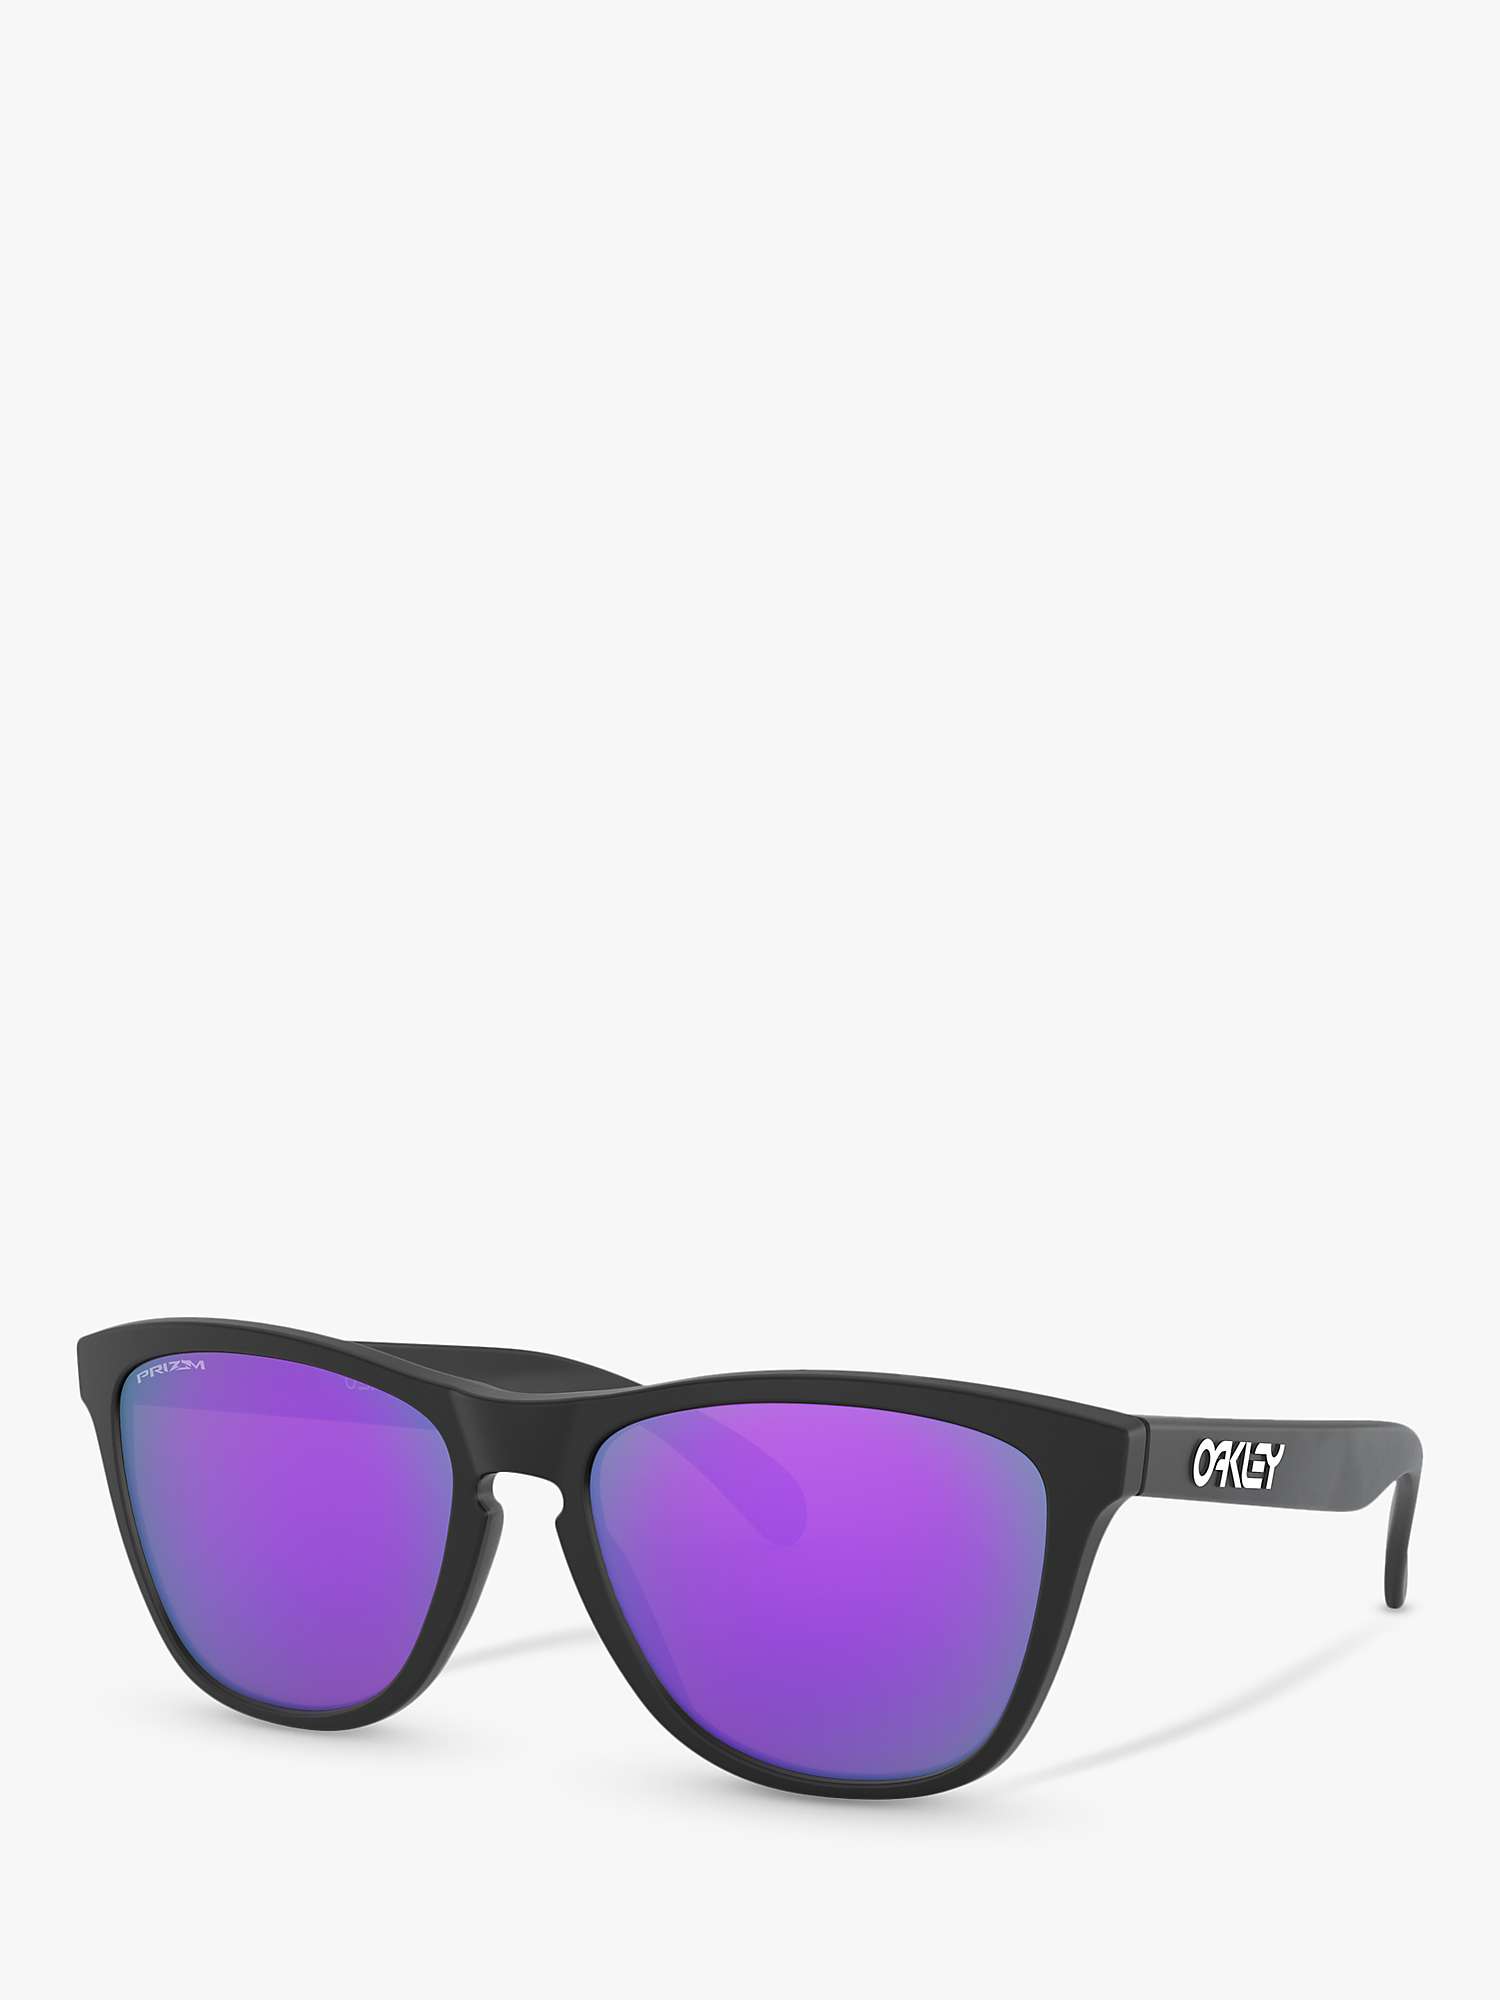 Buy Oakley OO9013 Men's Frogskins Prizm Square Sunglasses, Matte Black/Mirror Purple Online at johnlewis.com